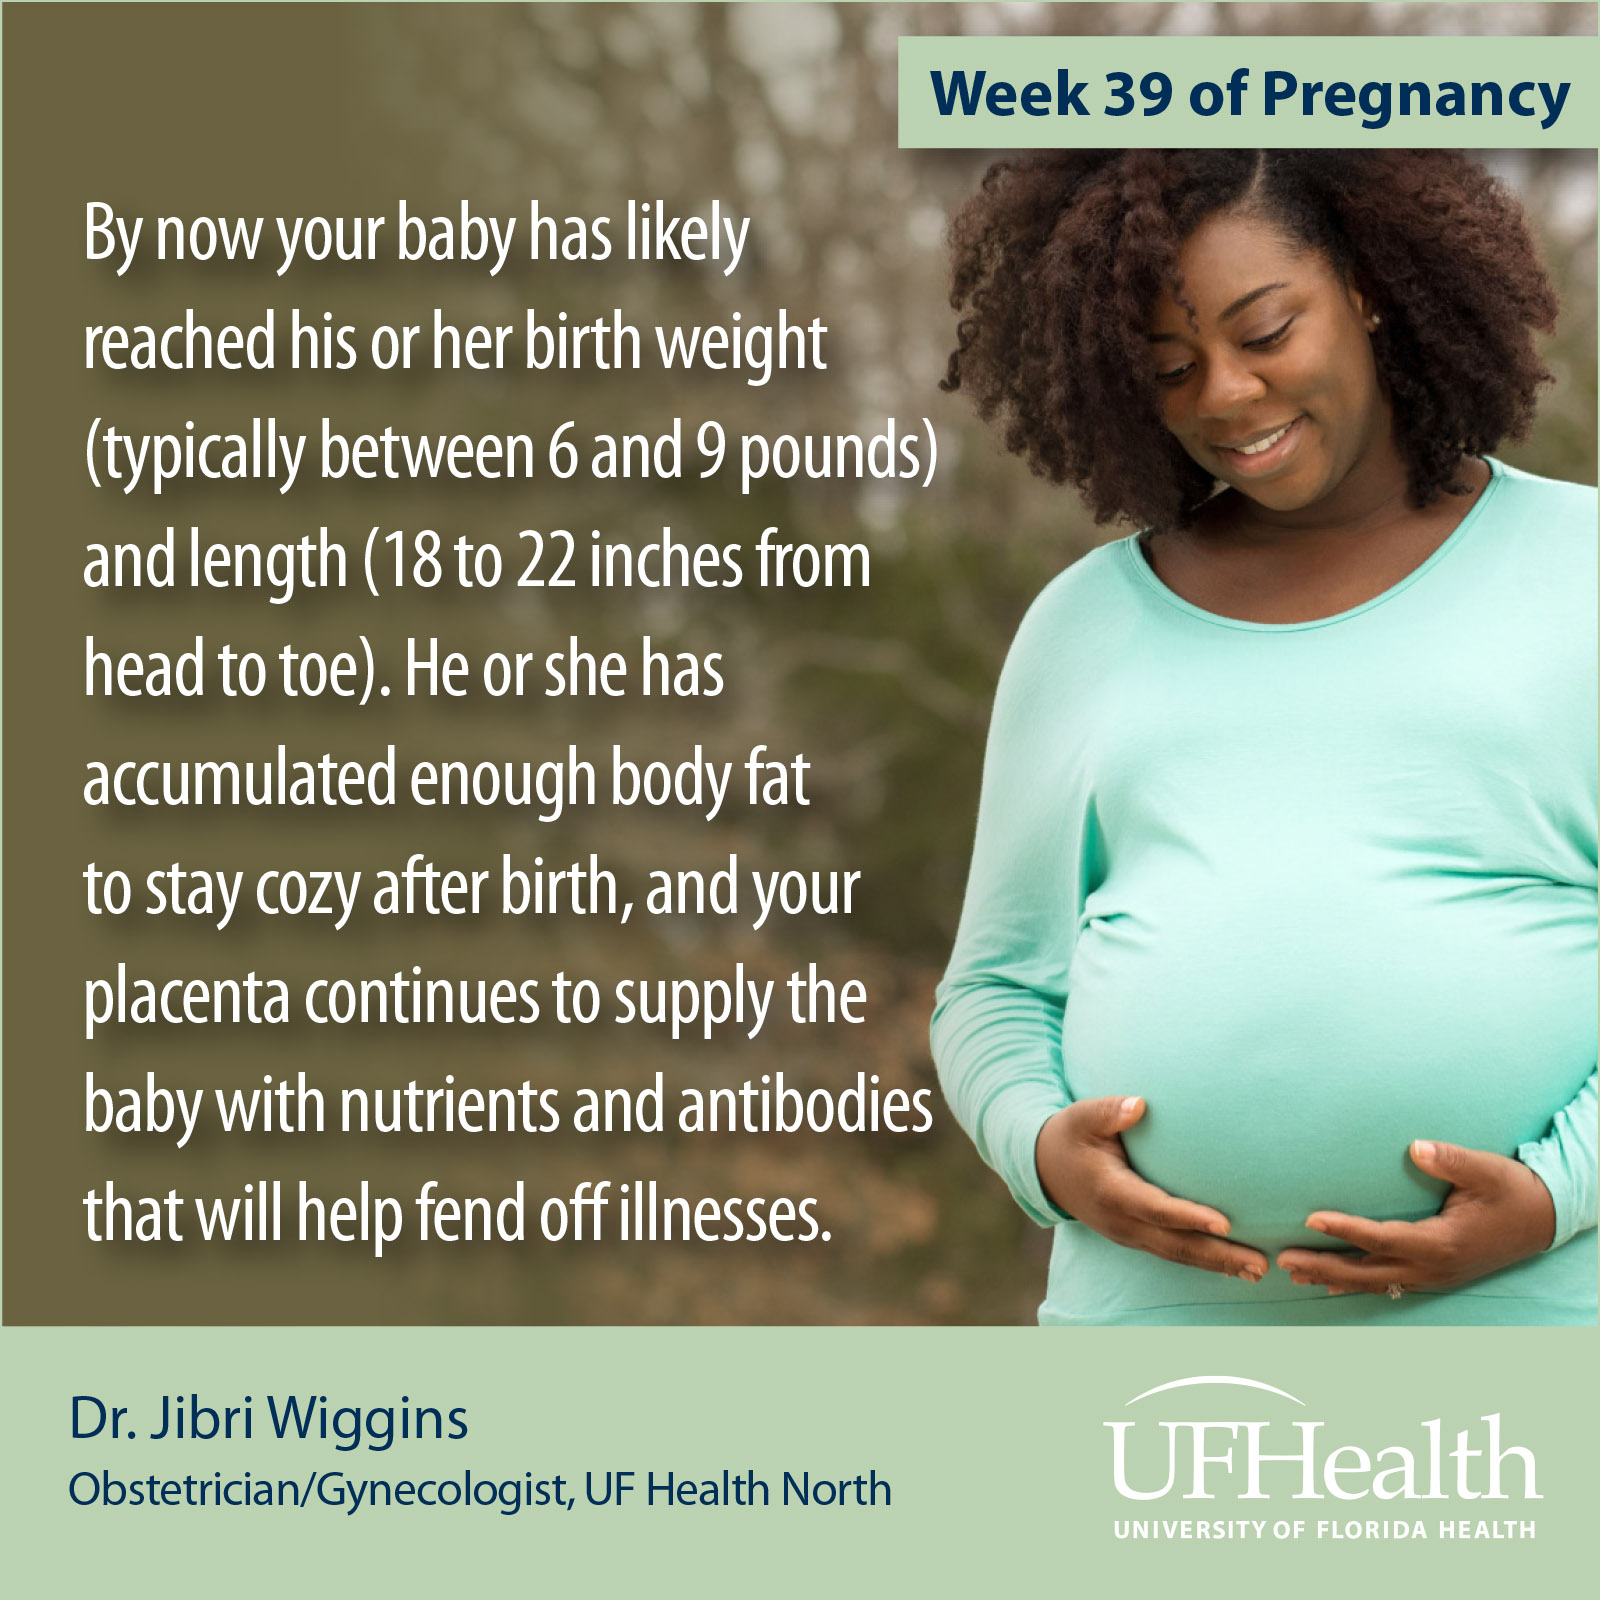 UF Health North pregnancy tip 39